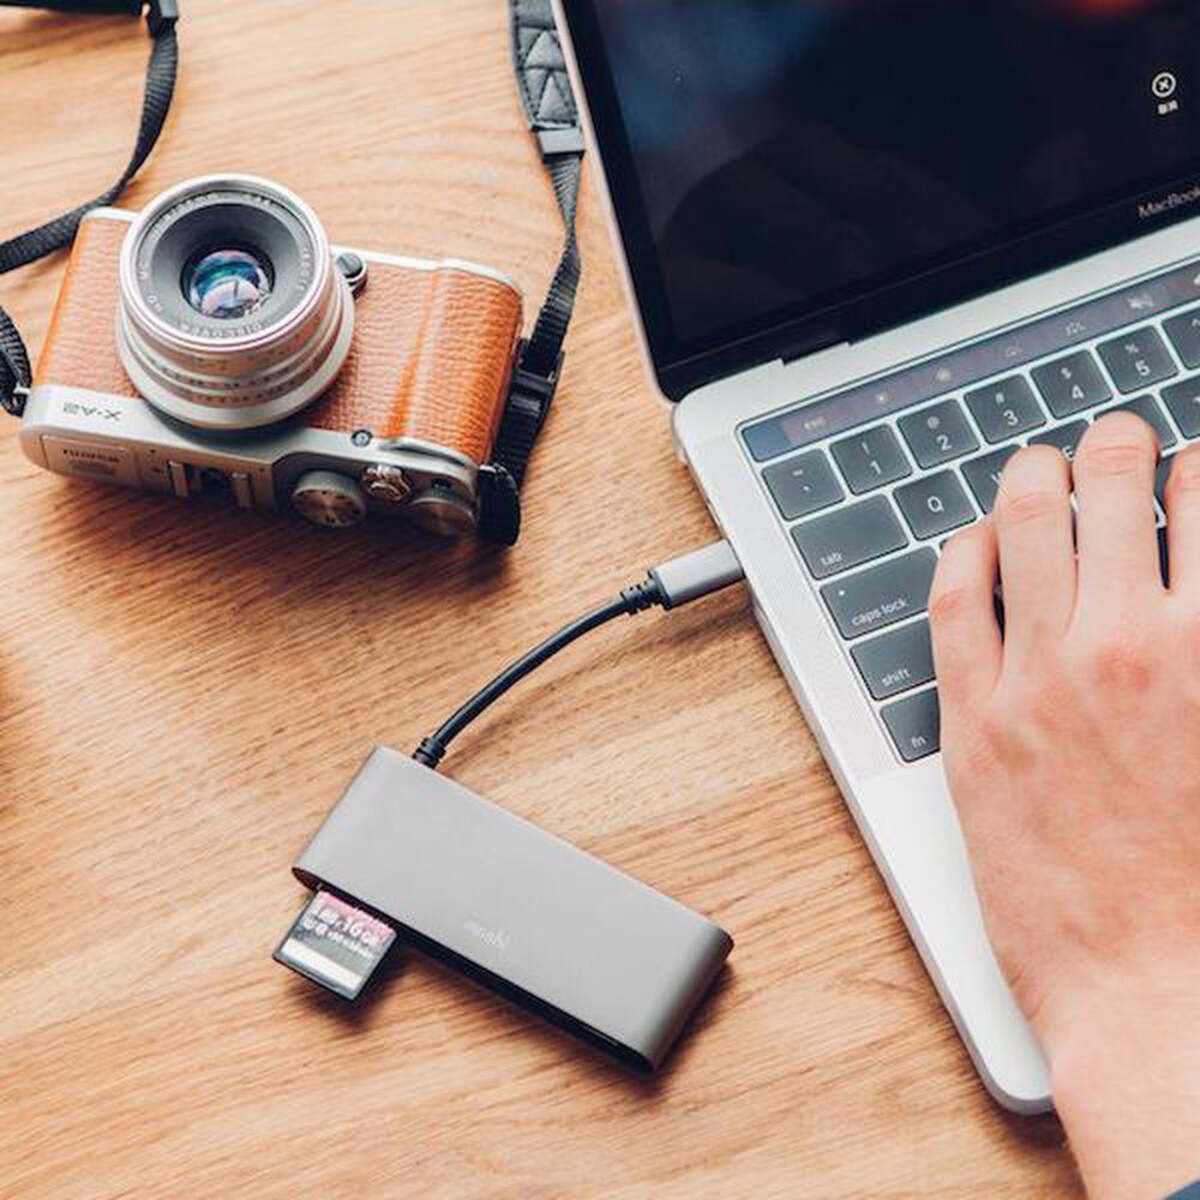 MOSHI USB-C To Multiport Adapter - Titanium Gray